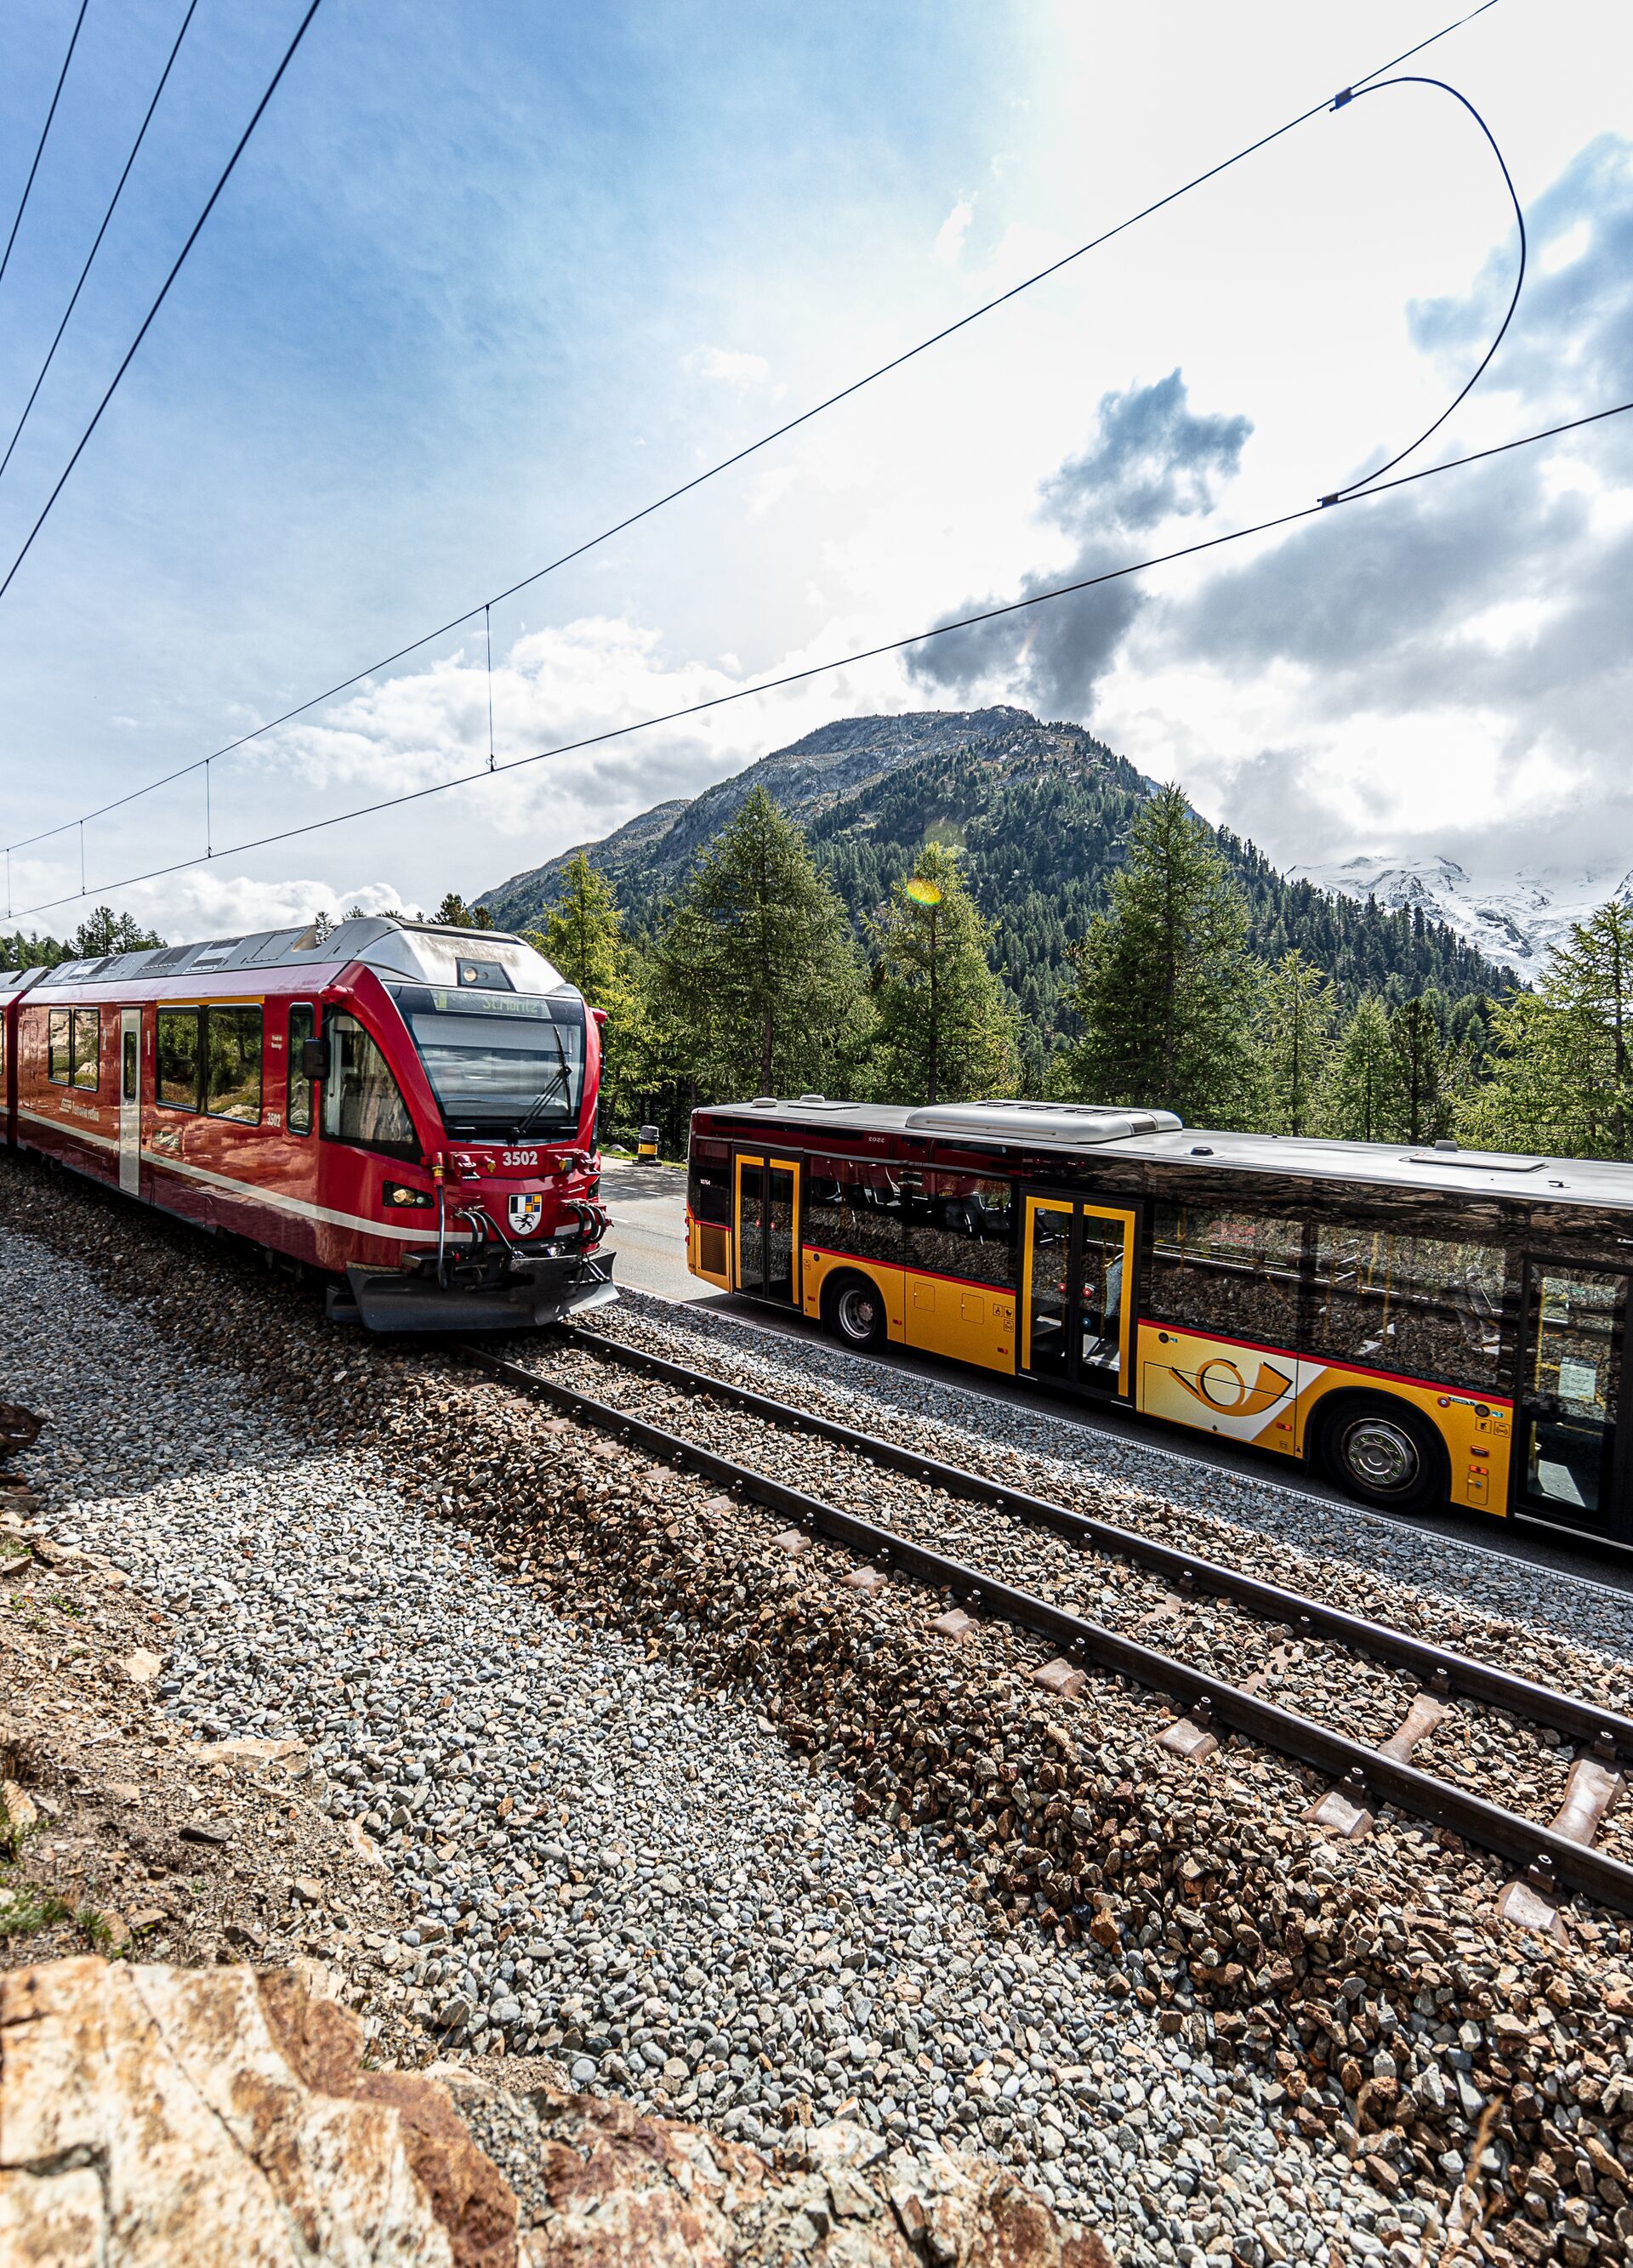 graubündenPASS - Through Graubünden by train and bus